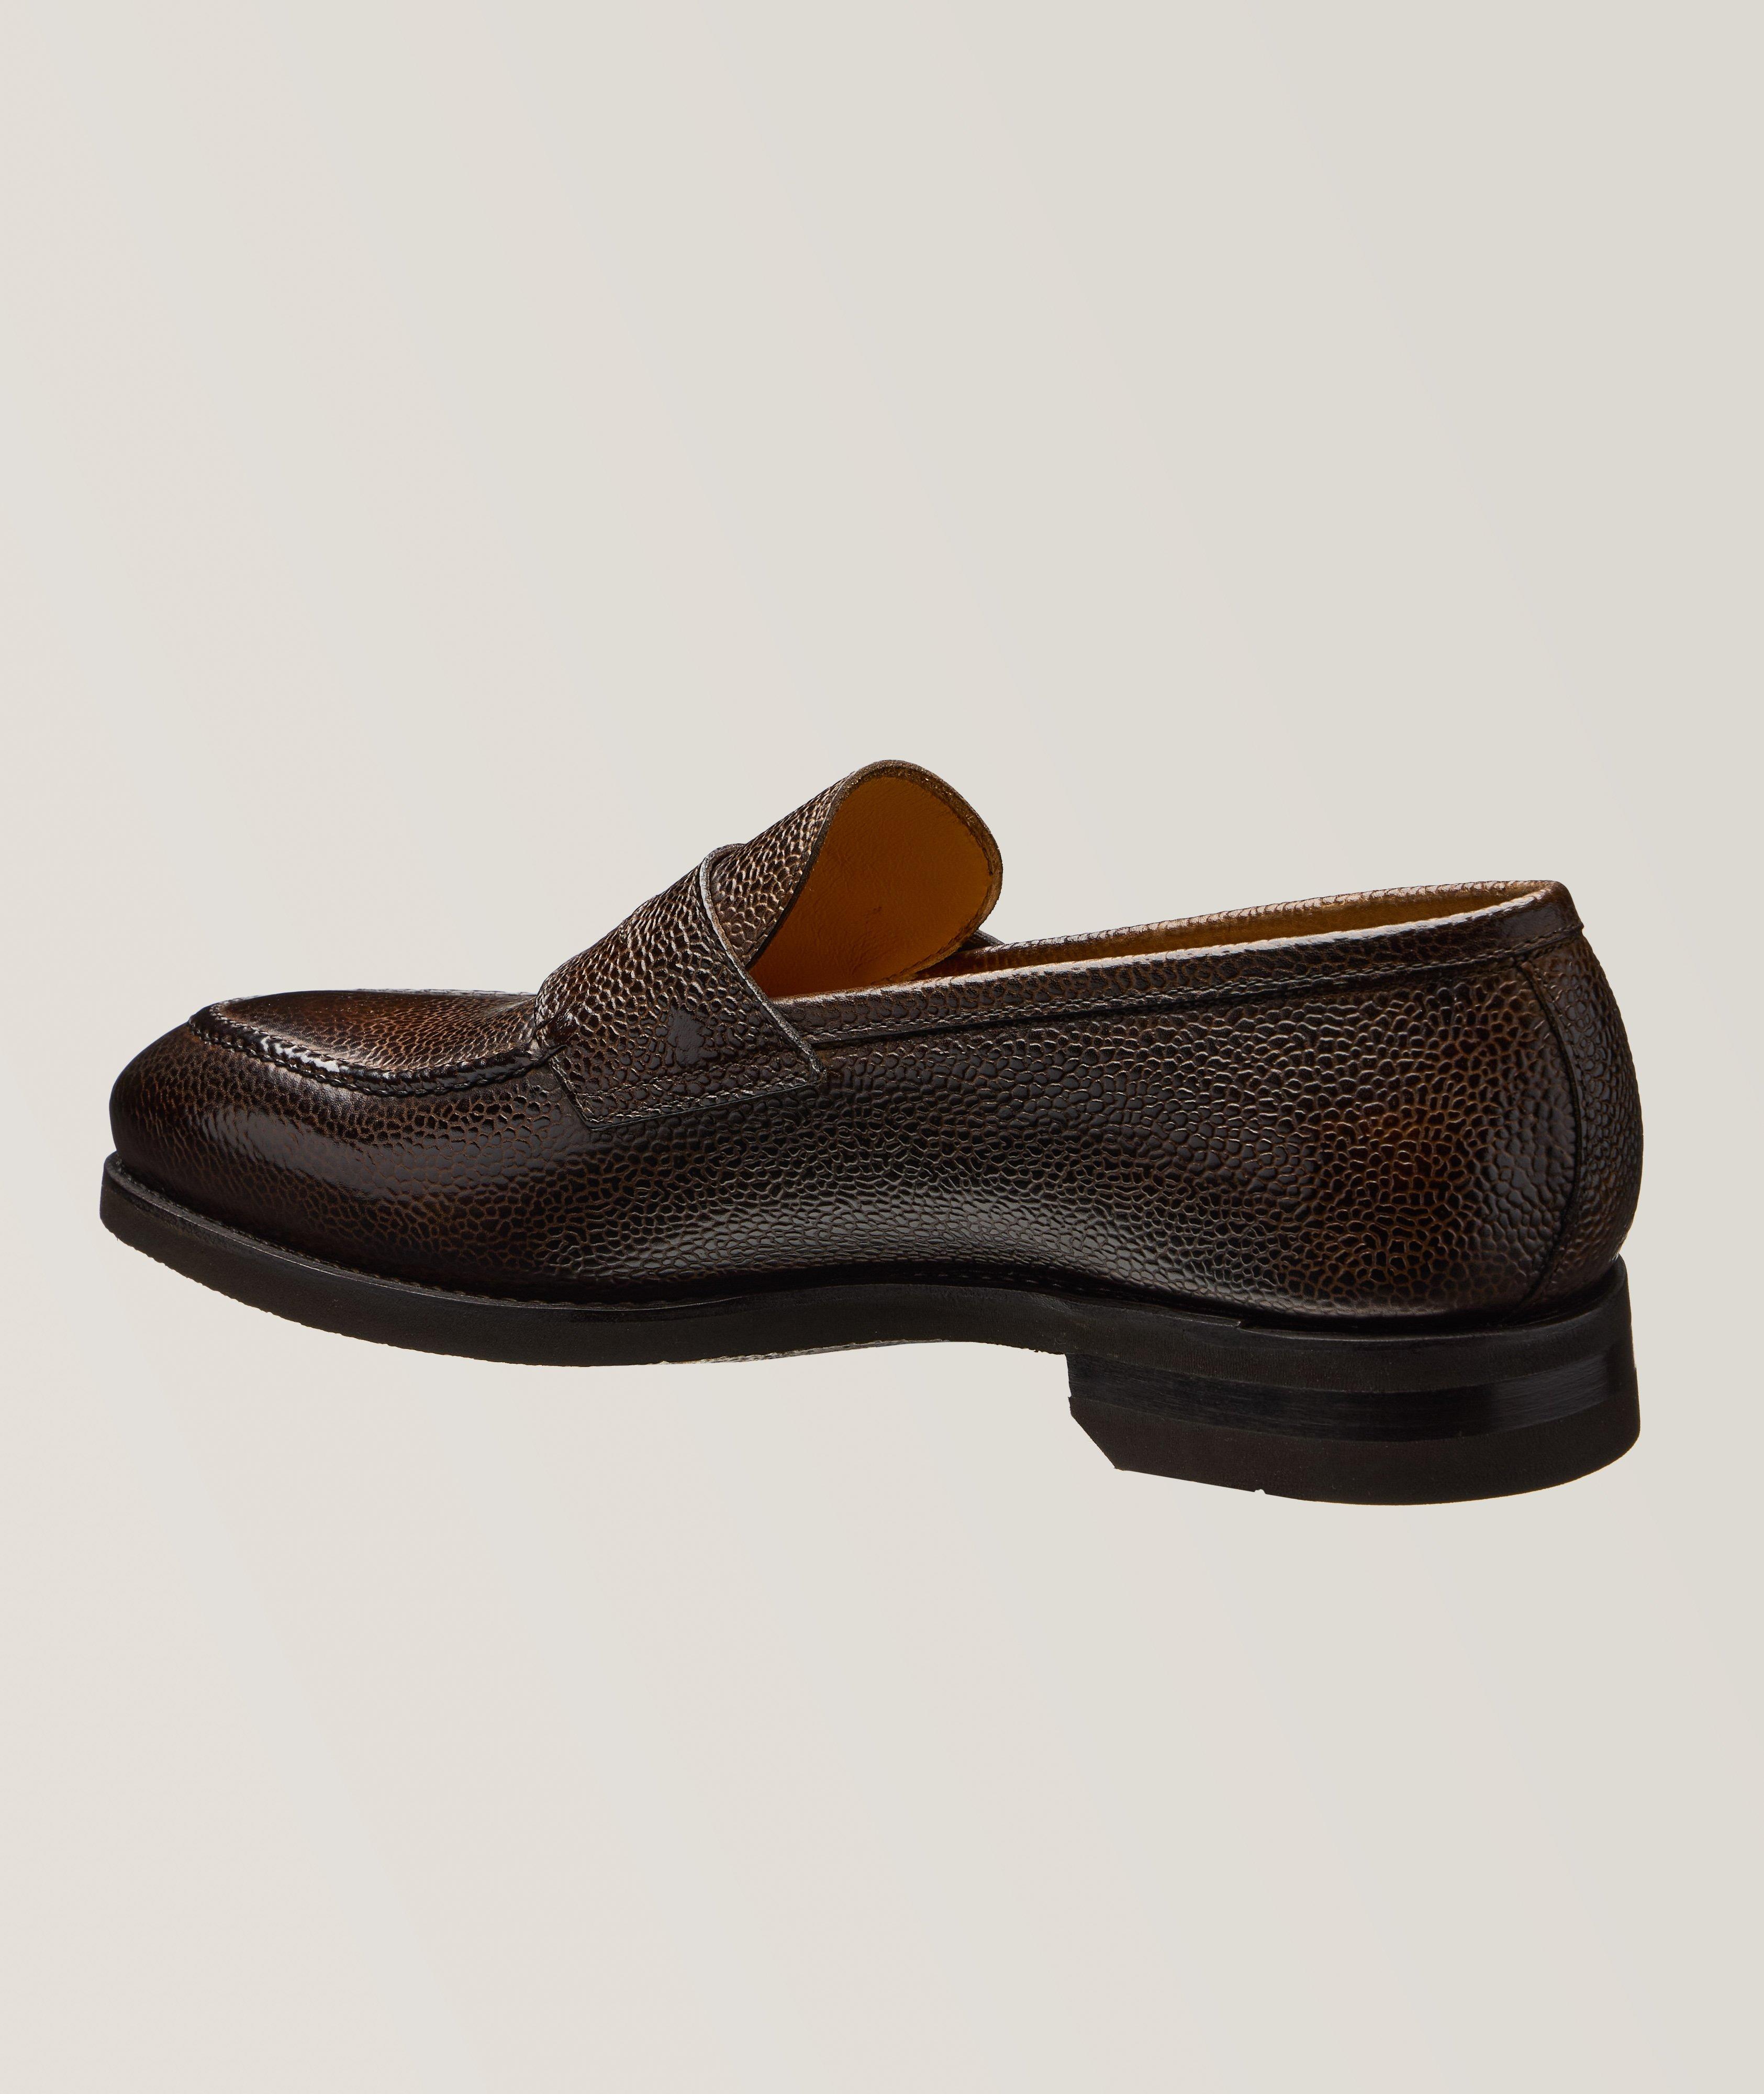 Principe Grain Leather Loafers